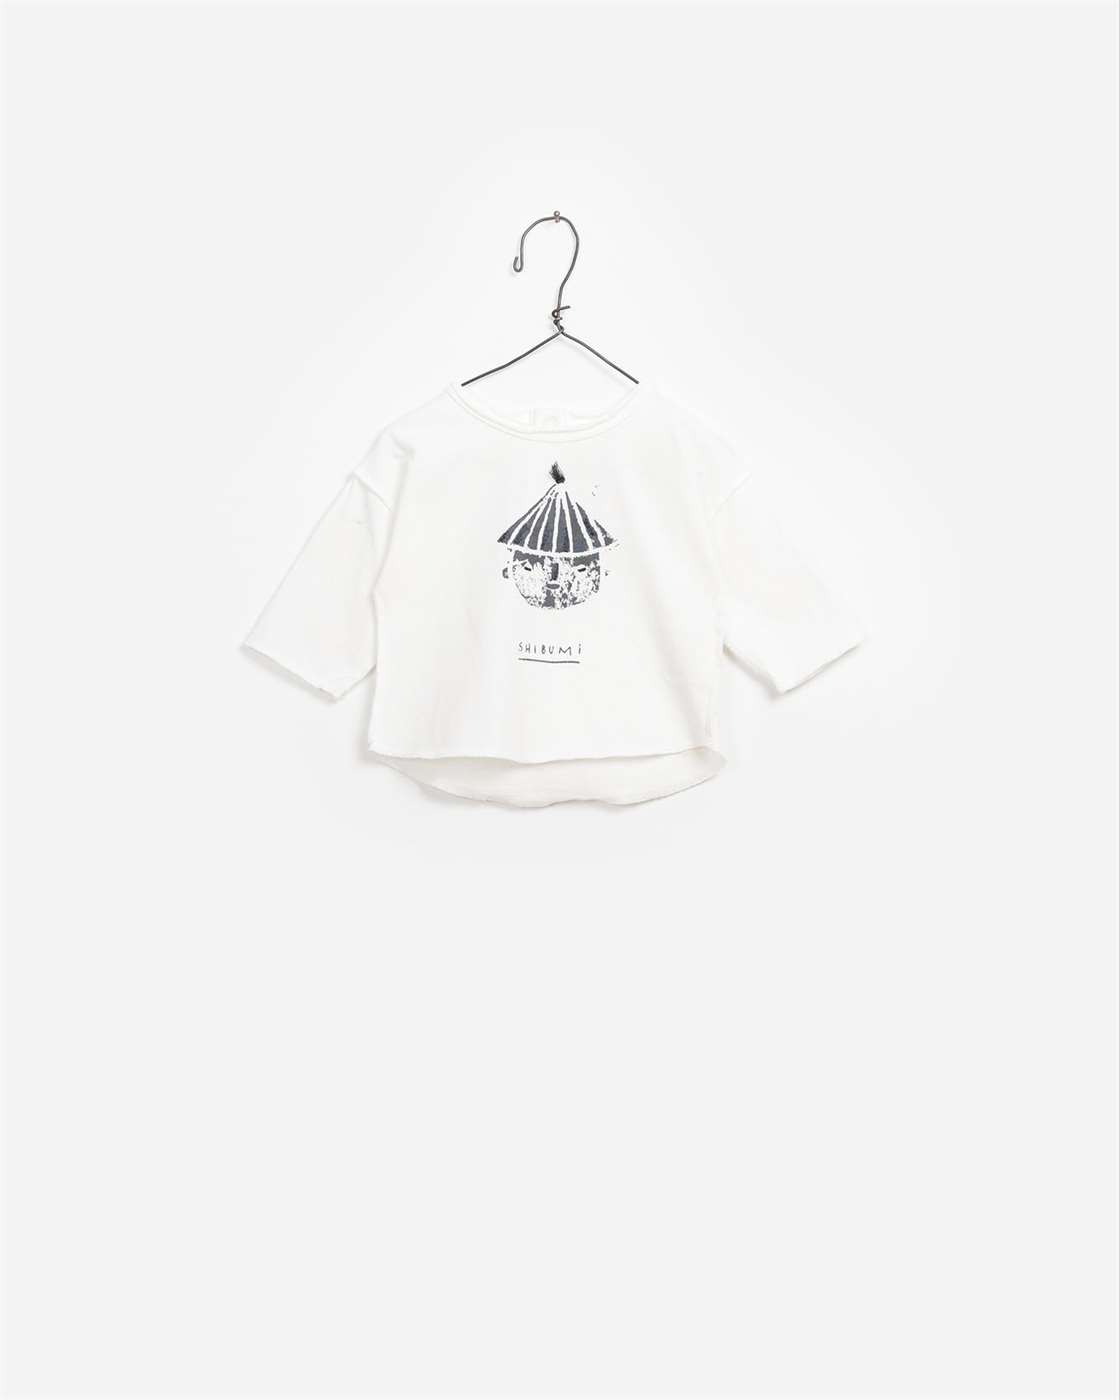 BeeBoo|BeeBoo PlayUp vêtements bébé baby clothes T Shirt LS Jersey coton bio organic cotton blanc white